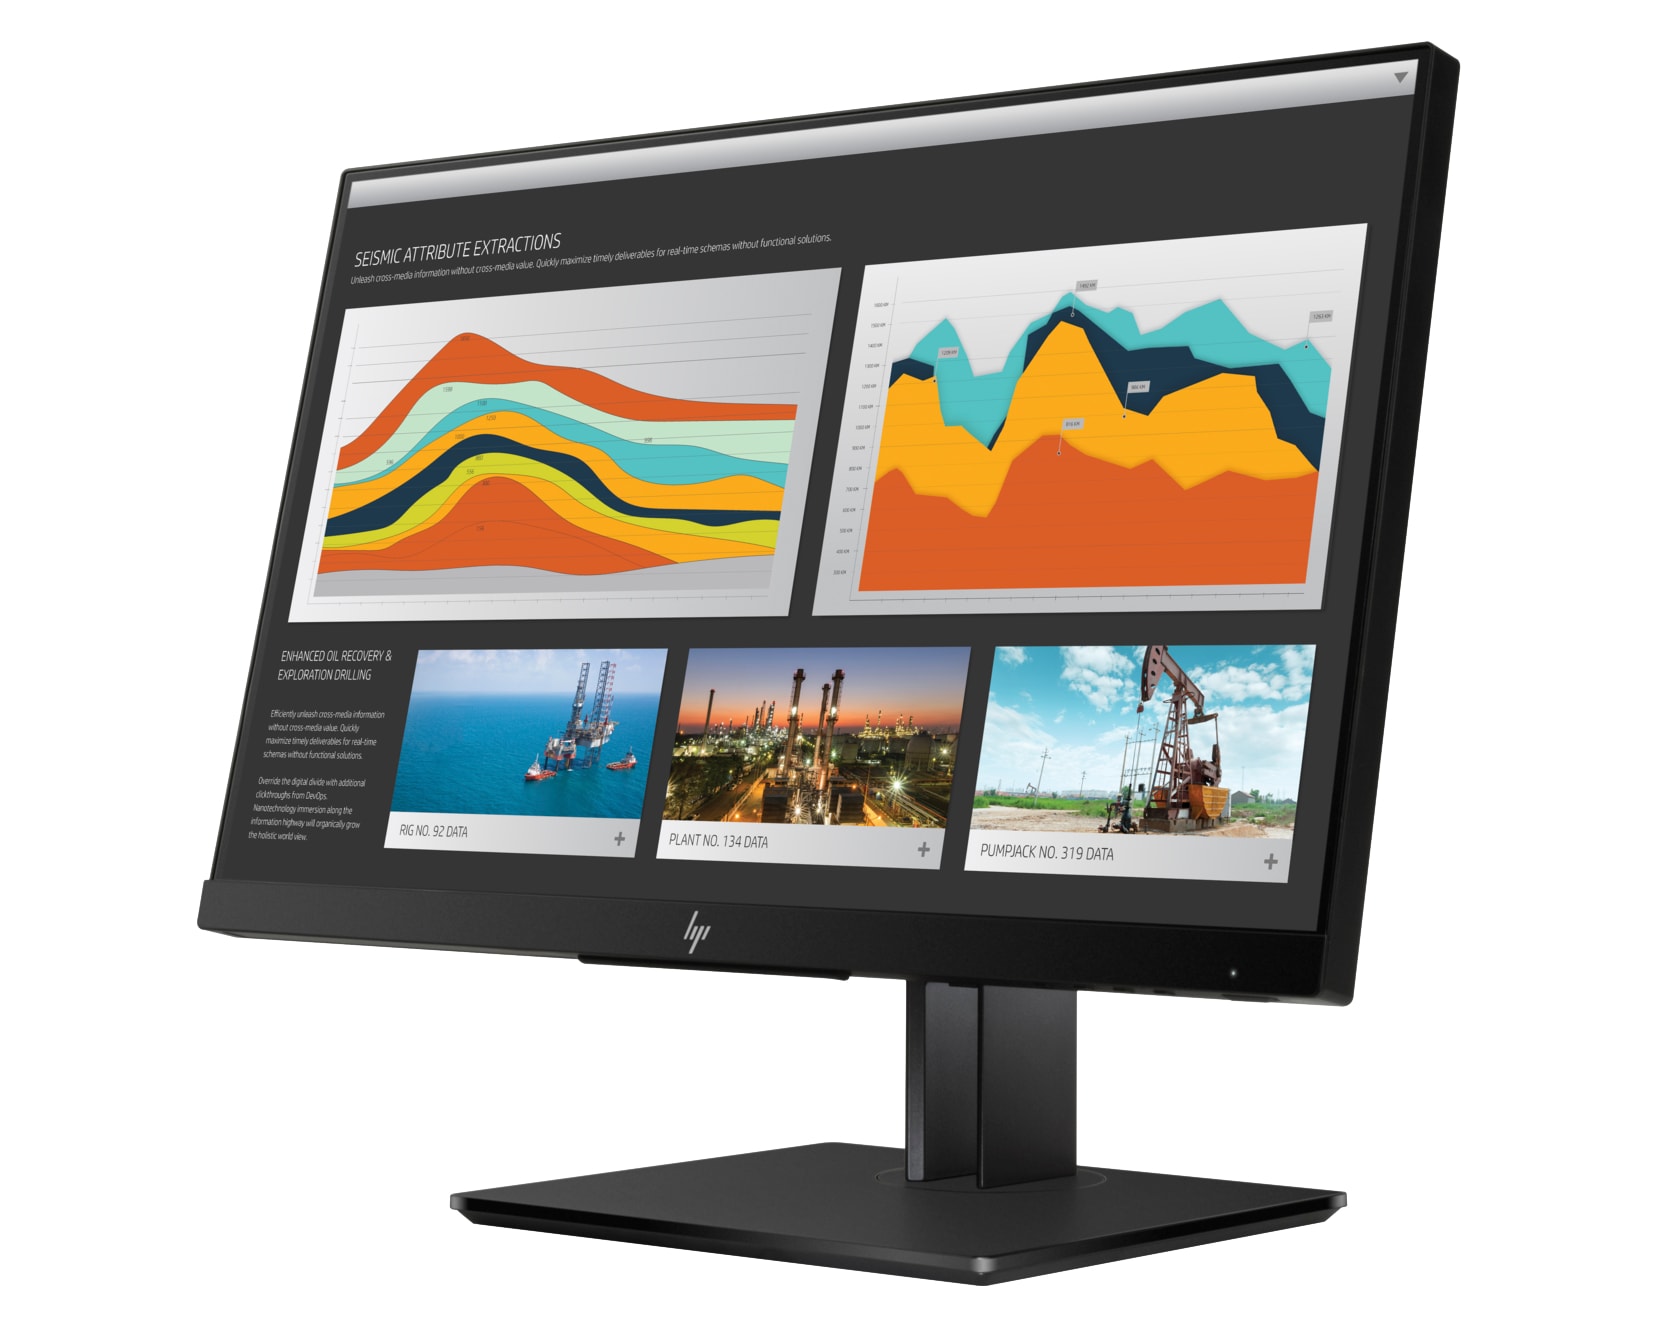 HP Z22n G2 - LED monitor - Full HD (1080p) - 21.5" - Smart Buy